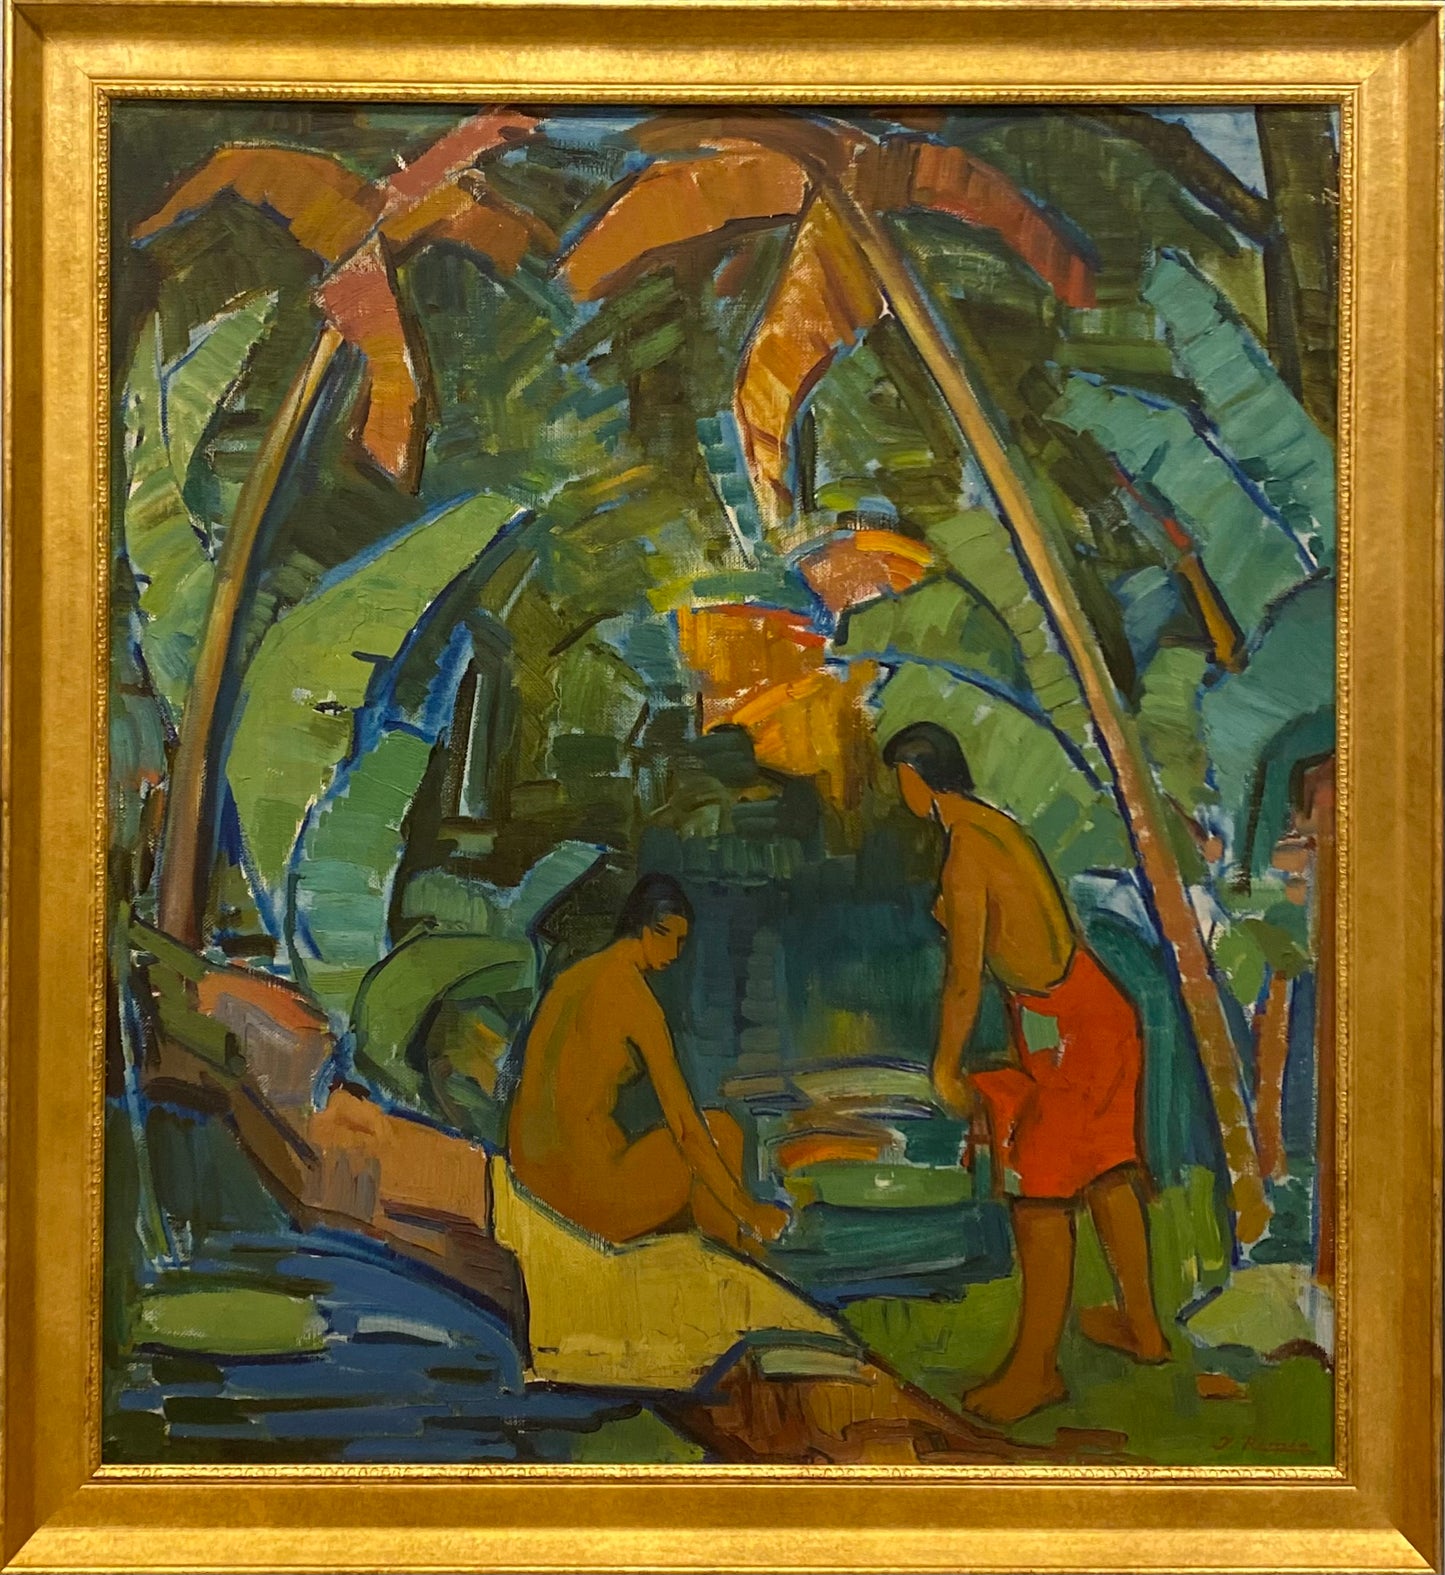 Jonas Rimša | Cornfields in Tahiti, c. 1967 | Oil on canvas, 93x84 (105x96)